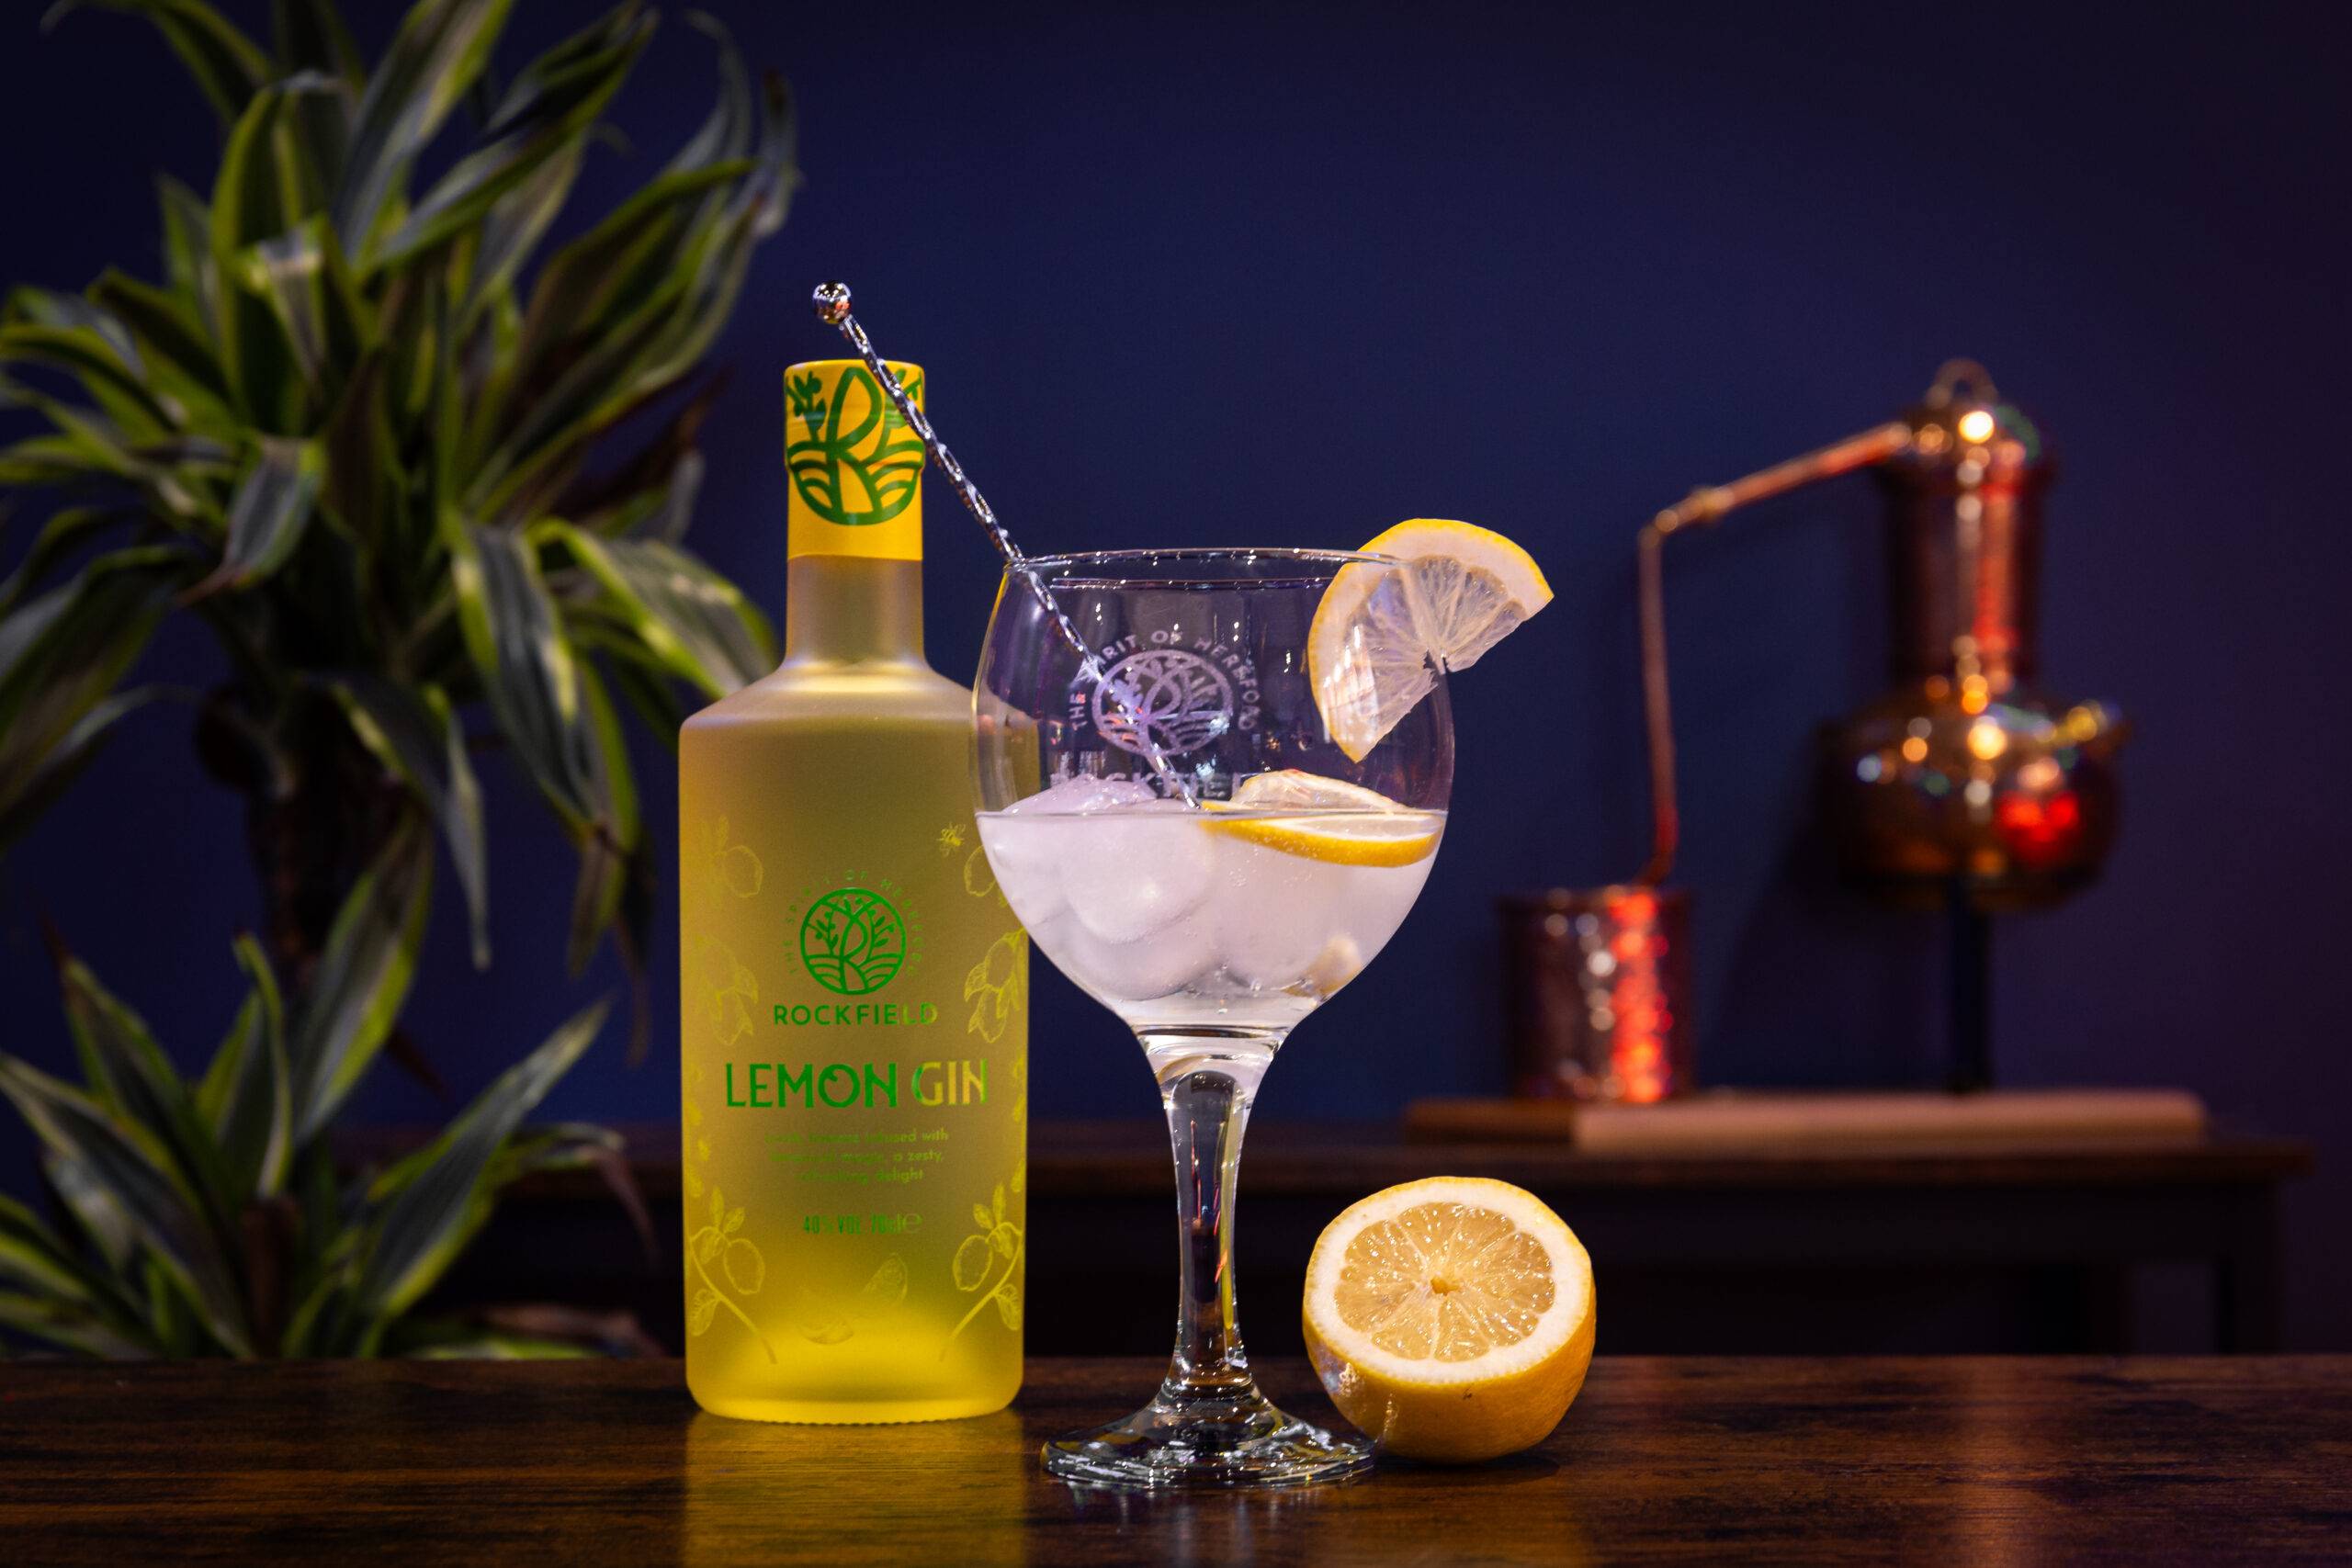 Lemon Gin Bottle with signature serve drink